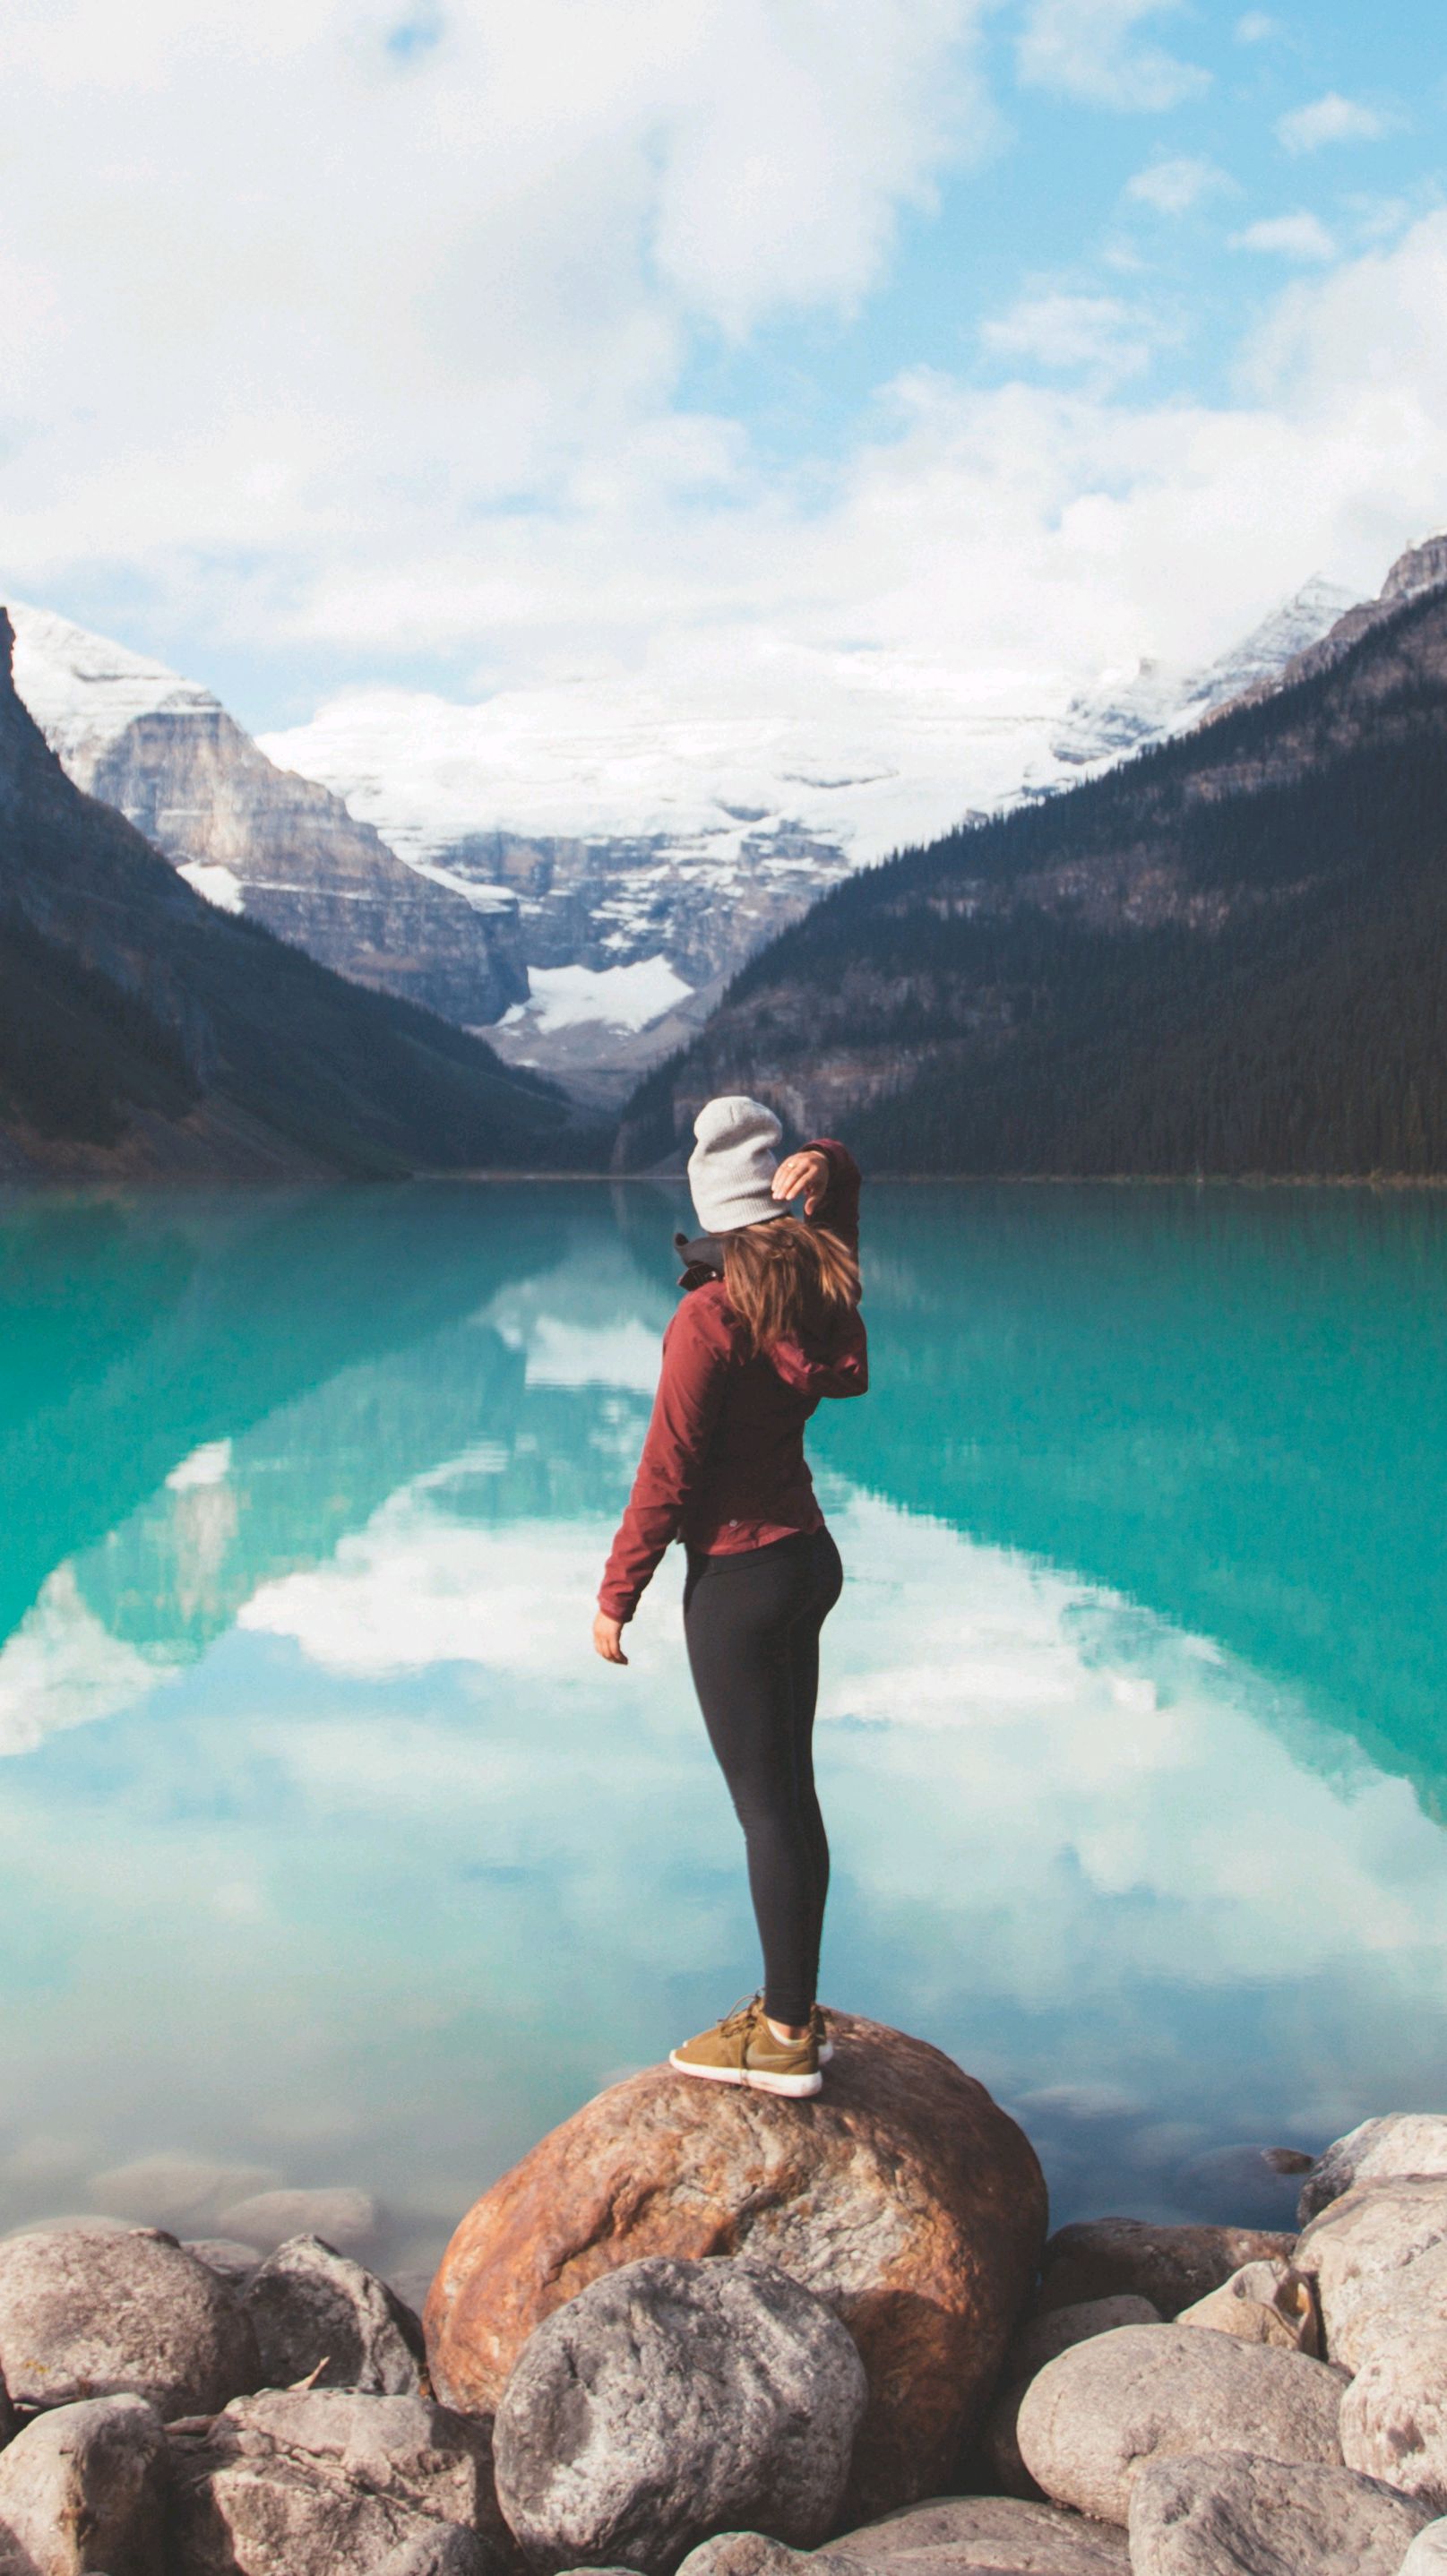 Girl At Deep Blue Lake Alberta Canada IPhone Wallpaper iPhoneswallpaper Com Wallpaper, iPhone Wallpaper